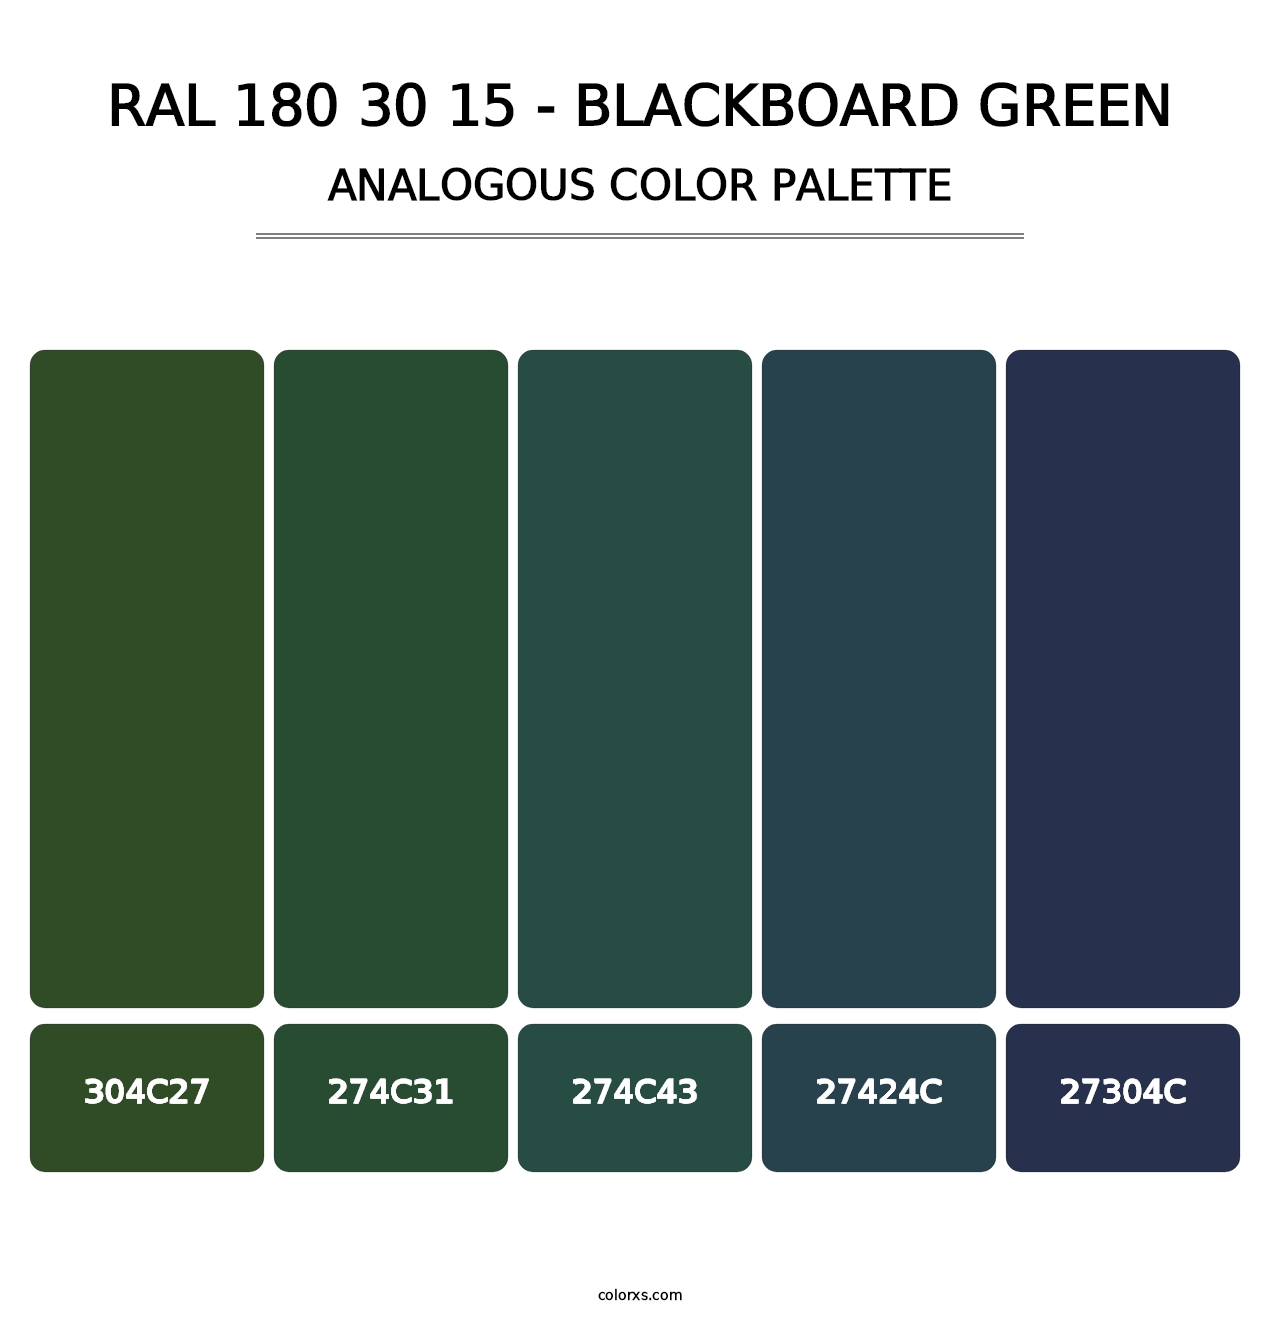 RAL 180 30 15 - Blackboard Green - Analogous Color Palette